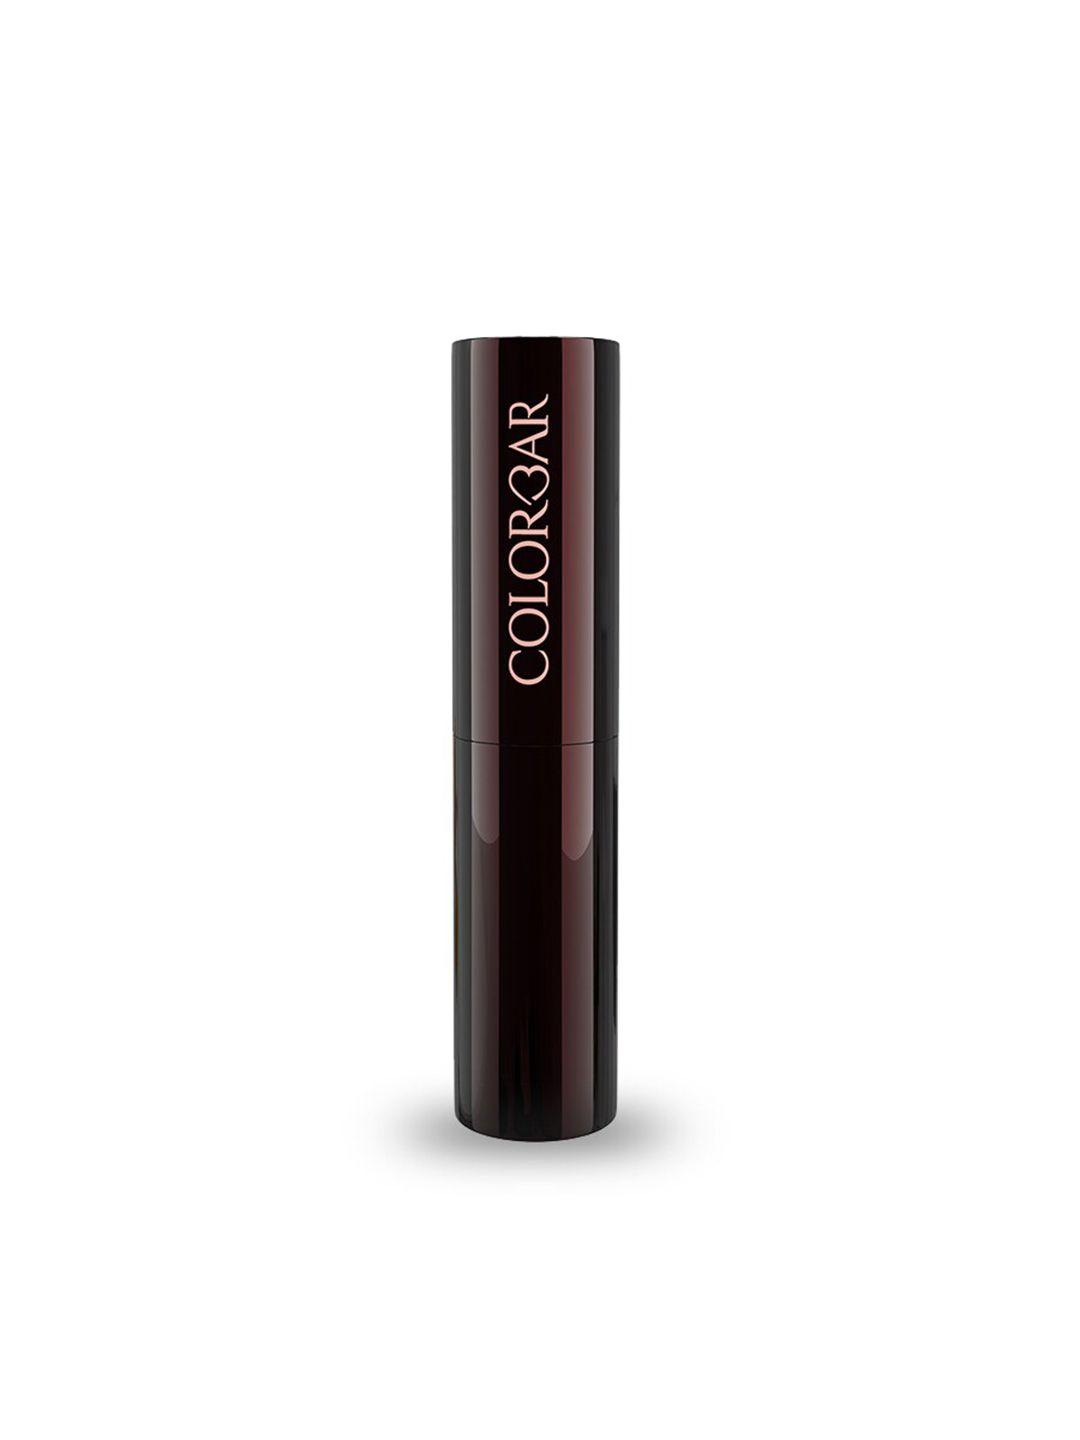 colorbar kissproof matte lipstick with vitamin e 3 g - babe alert 022